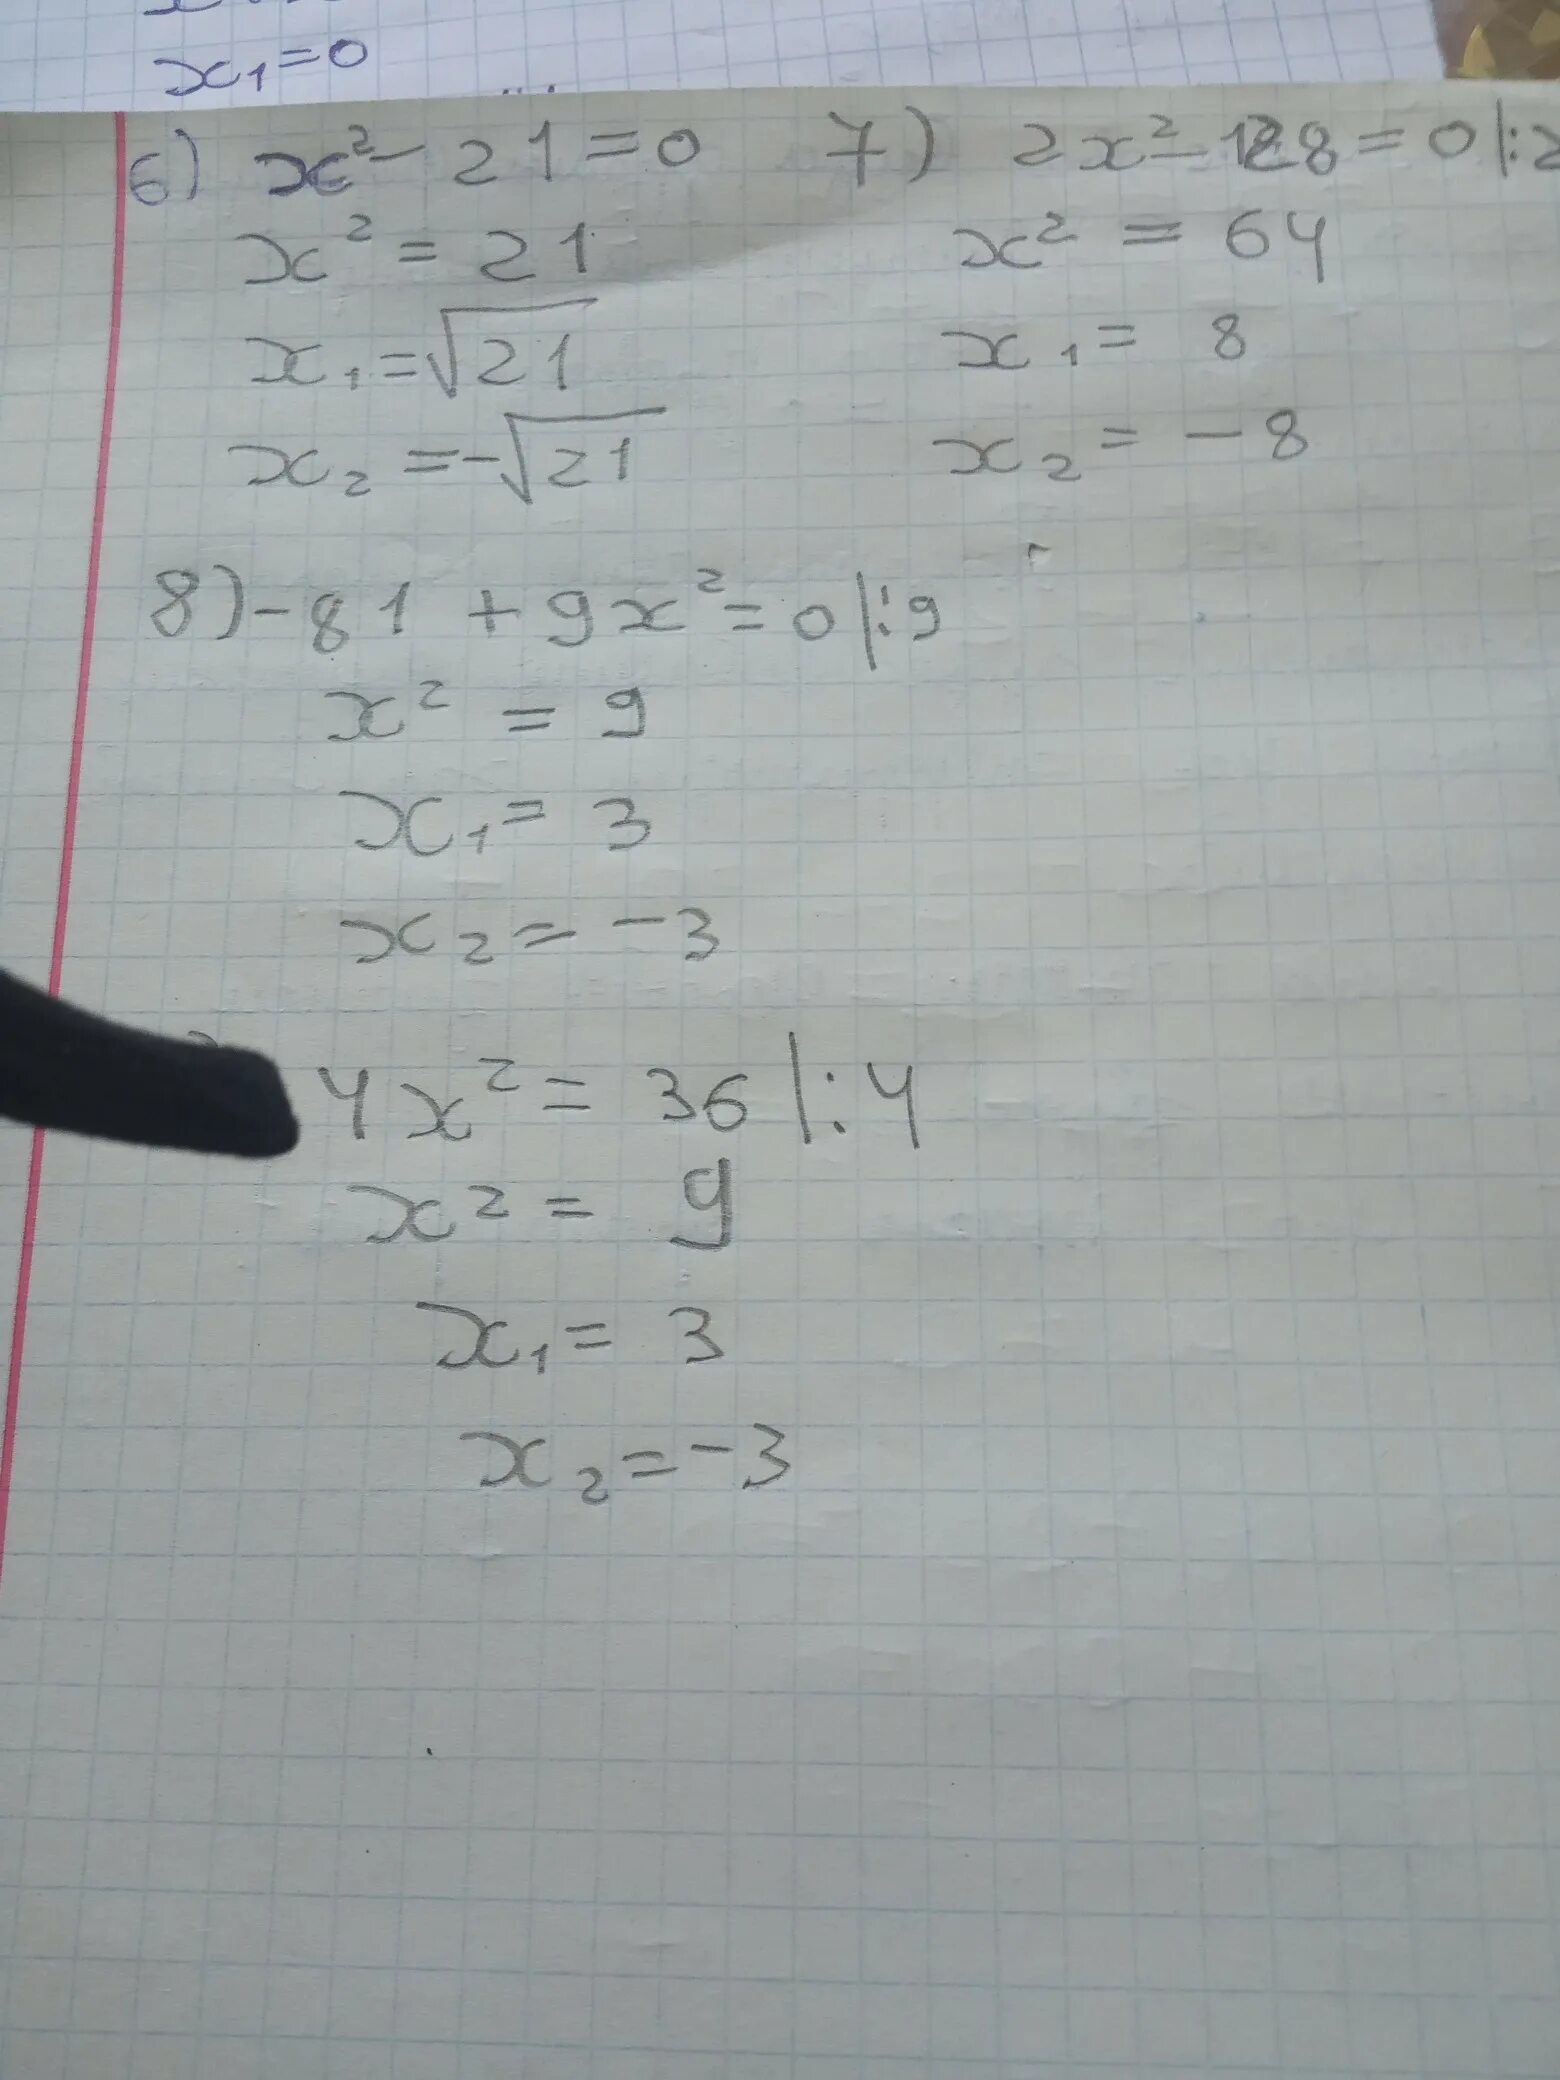 X2+3x-28. 5x^2+9x=0. X2/x2-9 12-x/x2-9. 3x 81 решение.